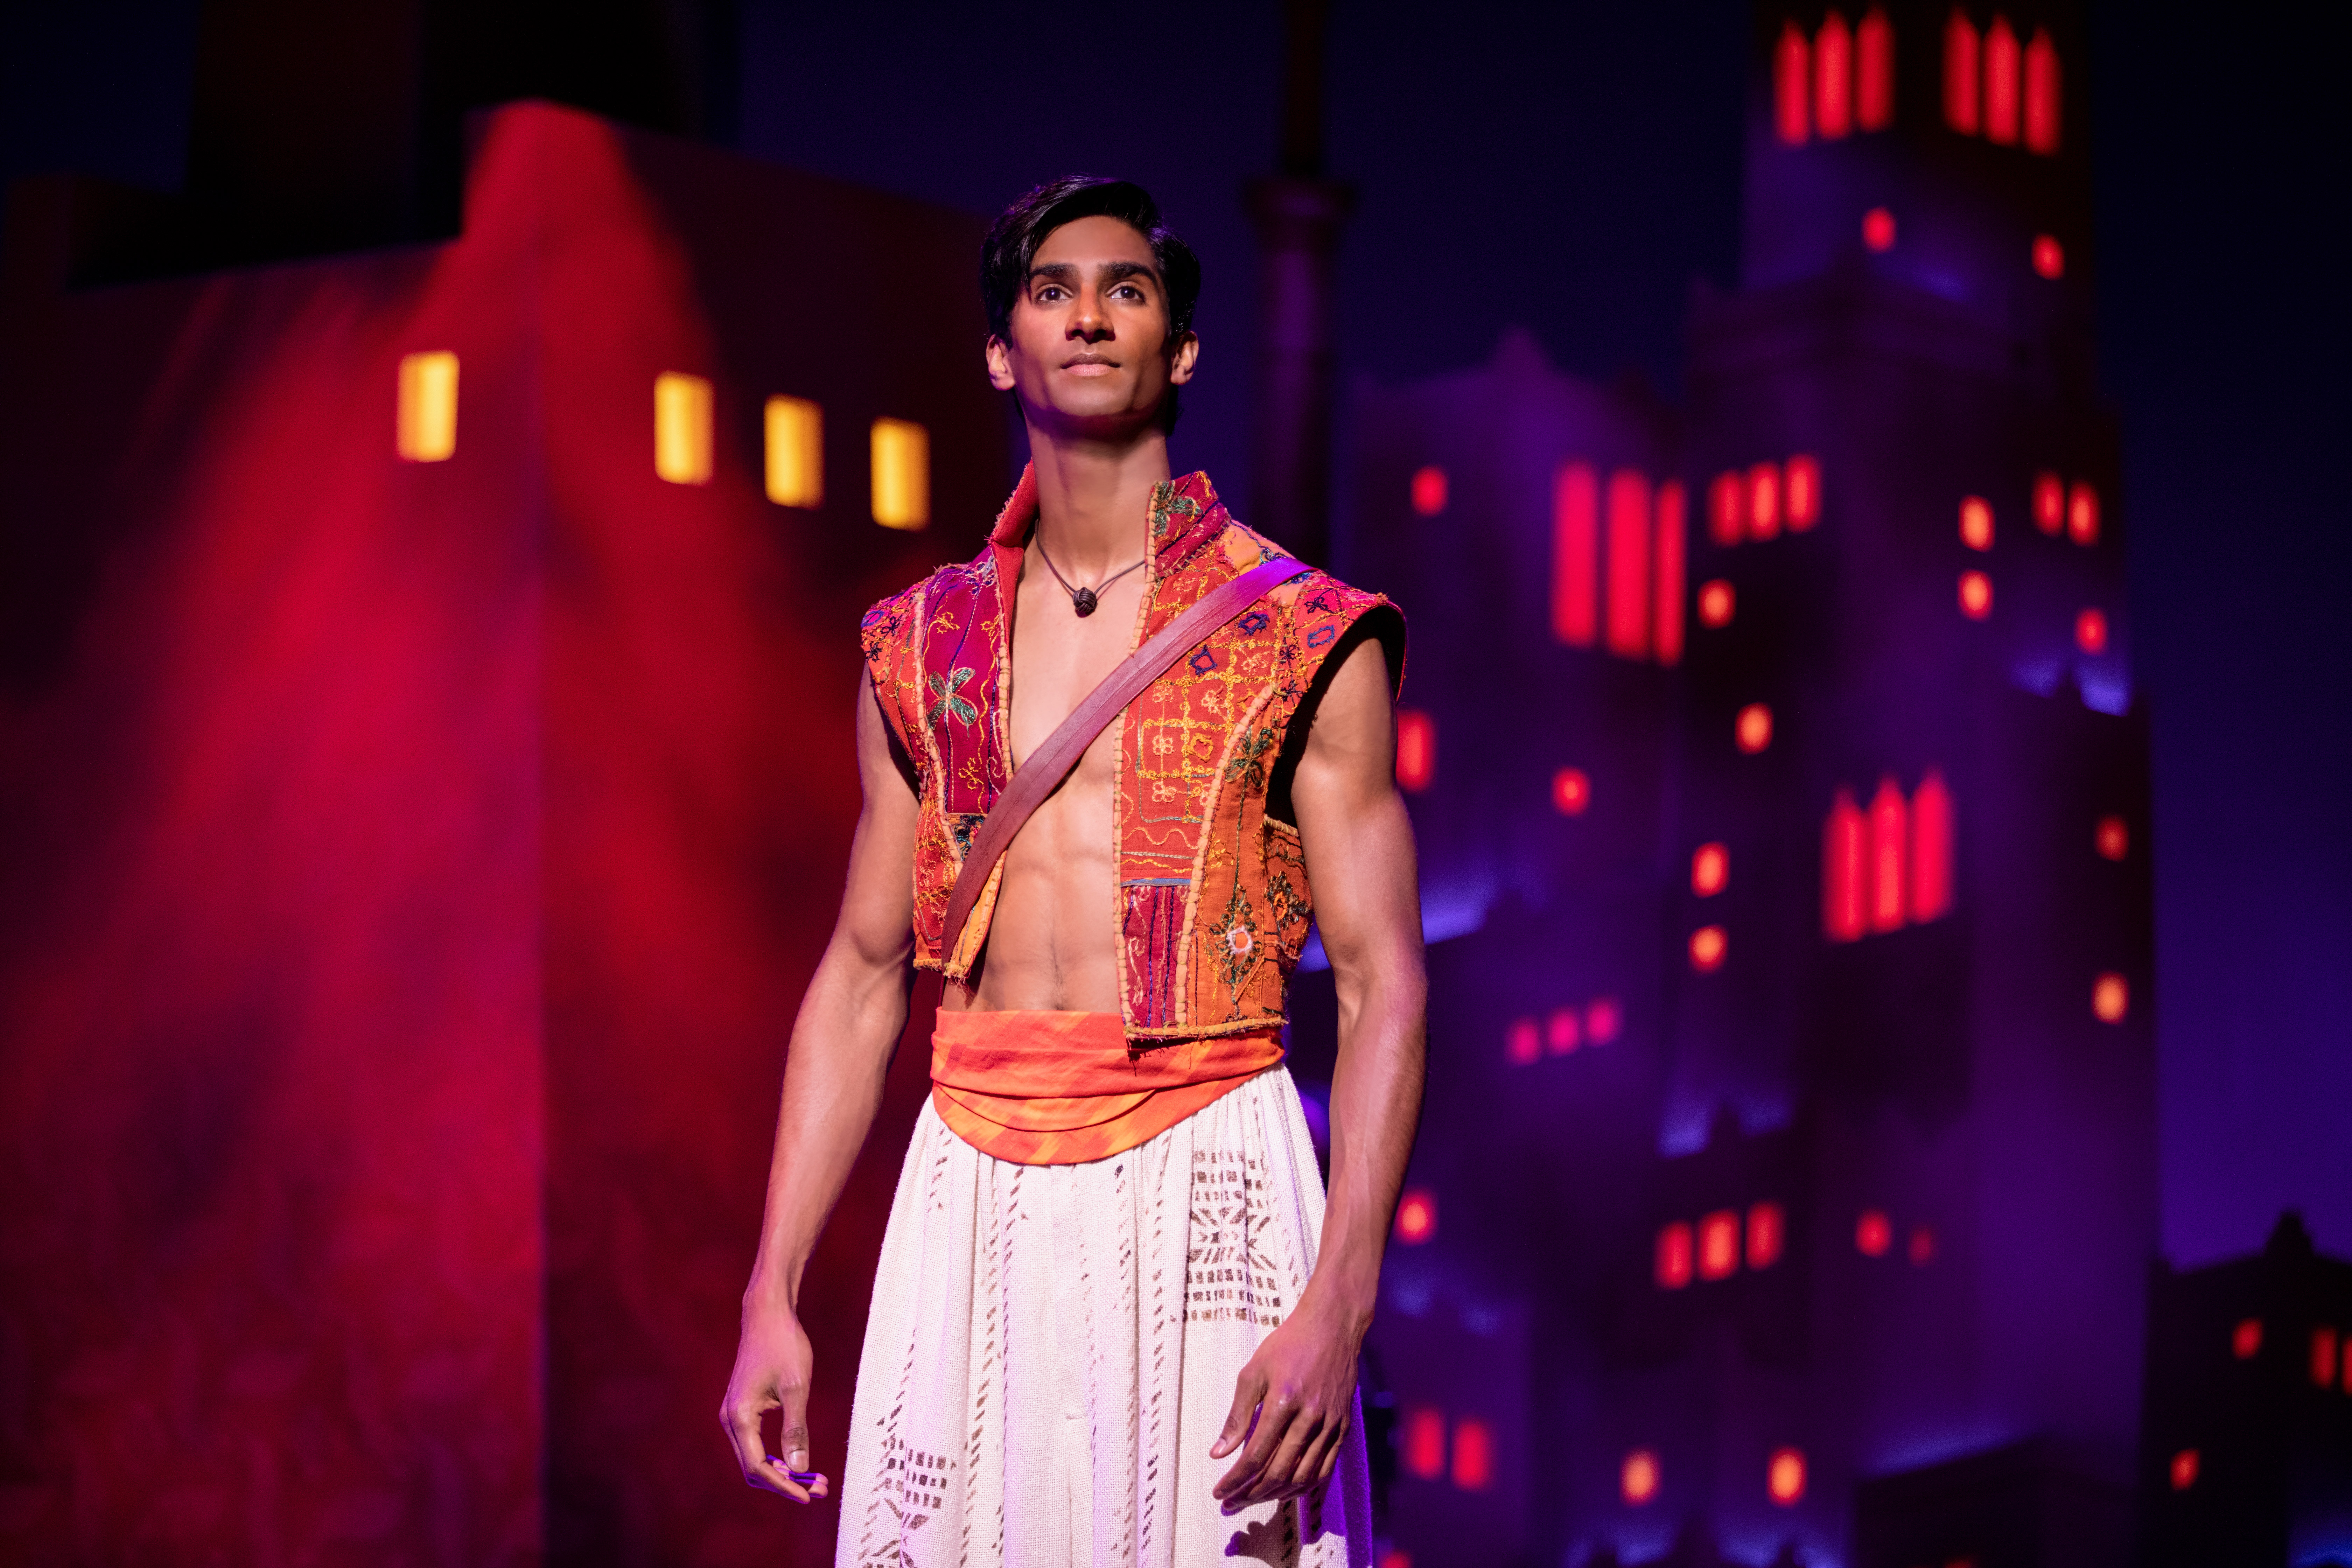 Michael Maliakel as the title character in Disney's Aladdin on Broadway. Photo by Matthew Murphy.